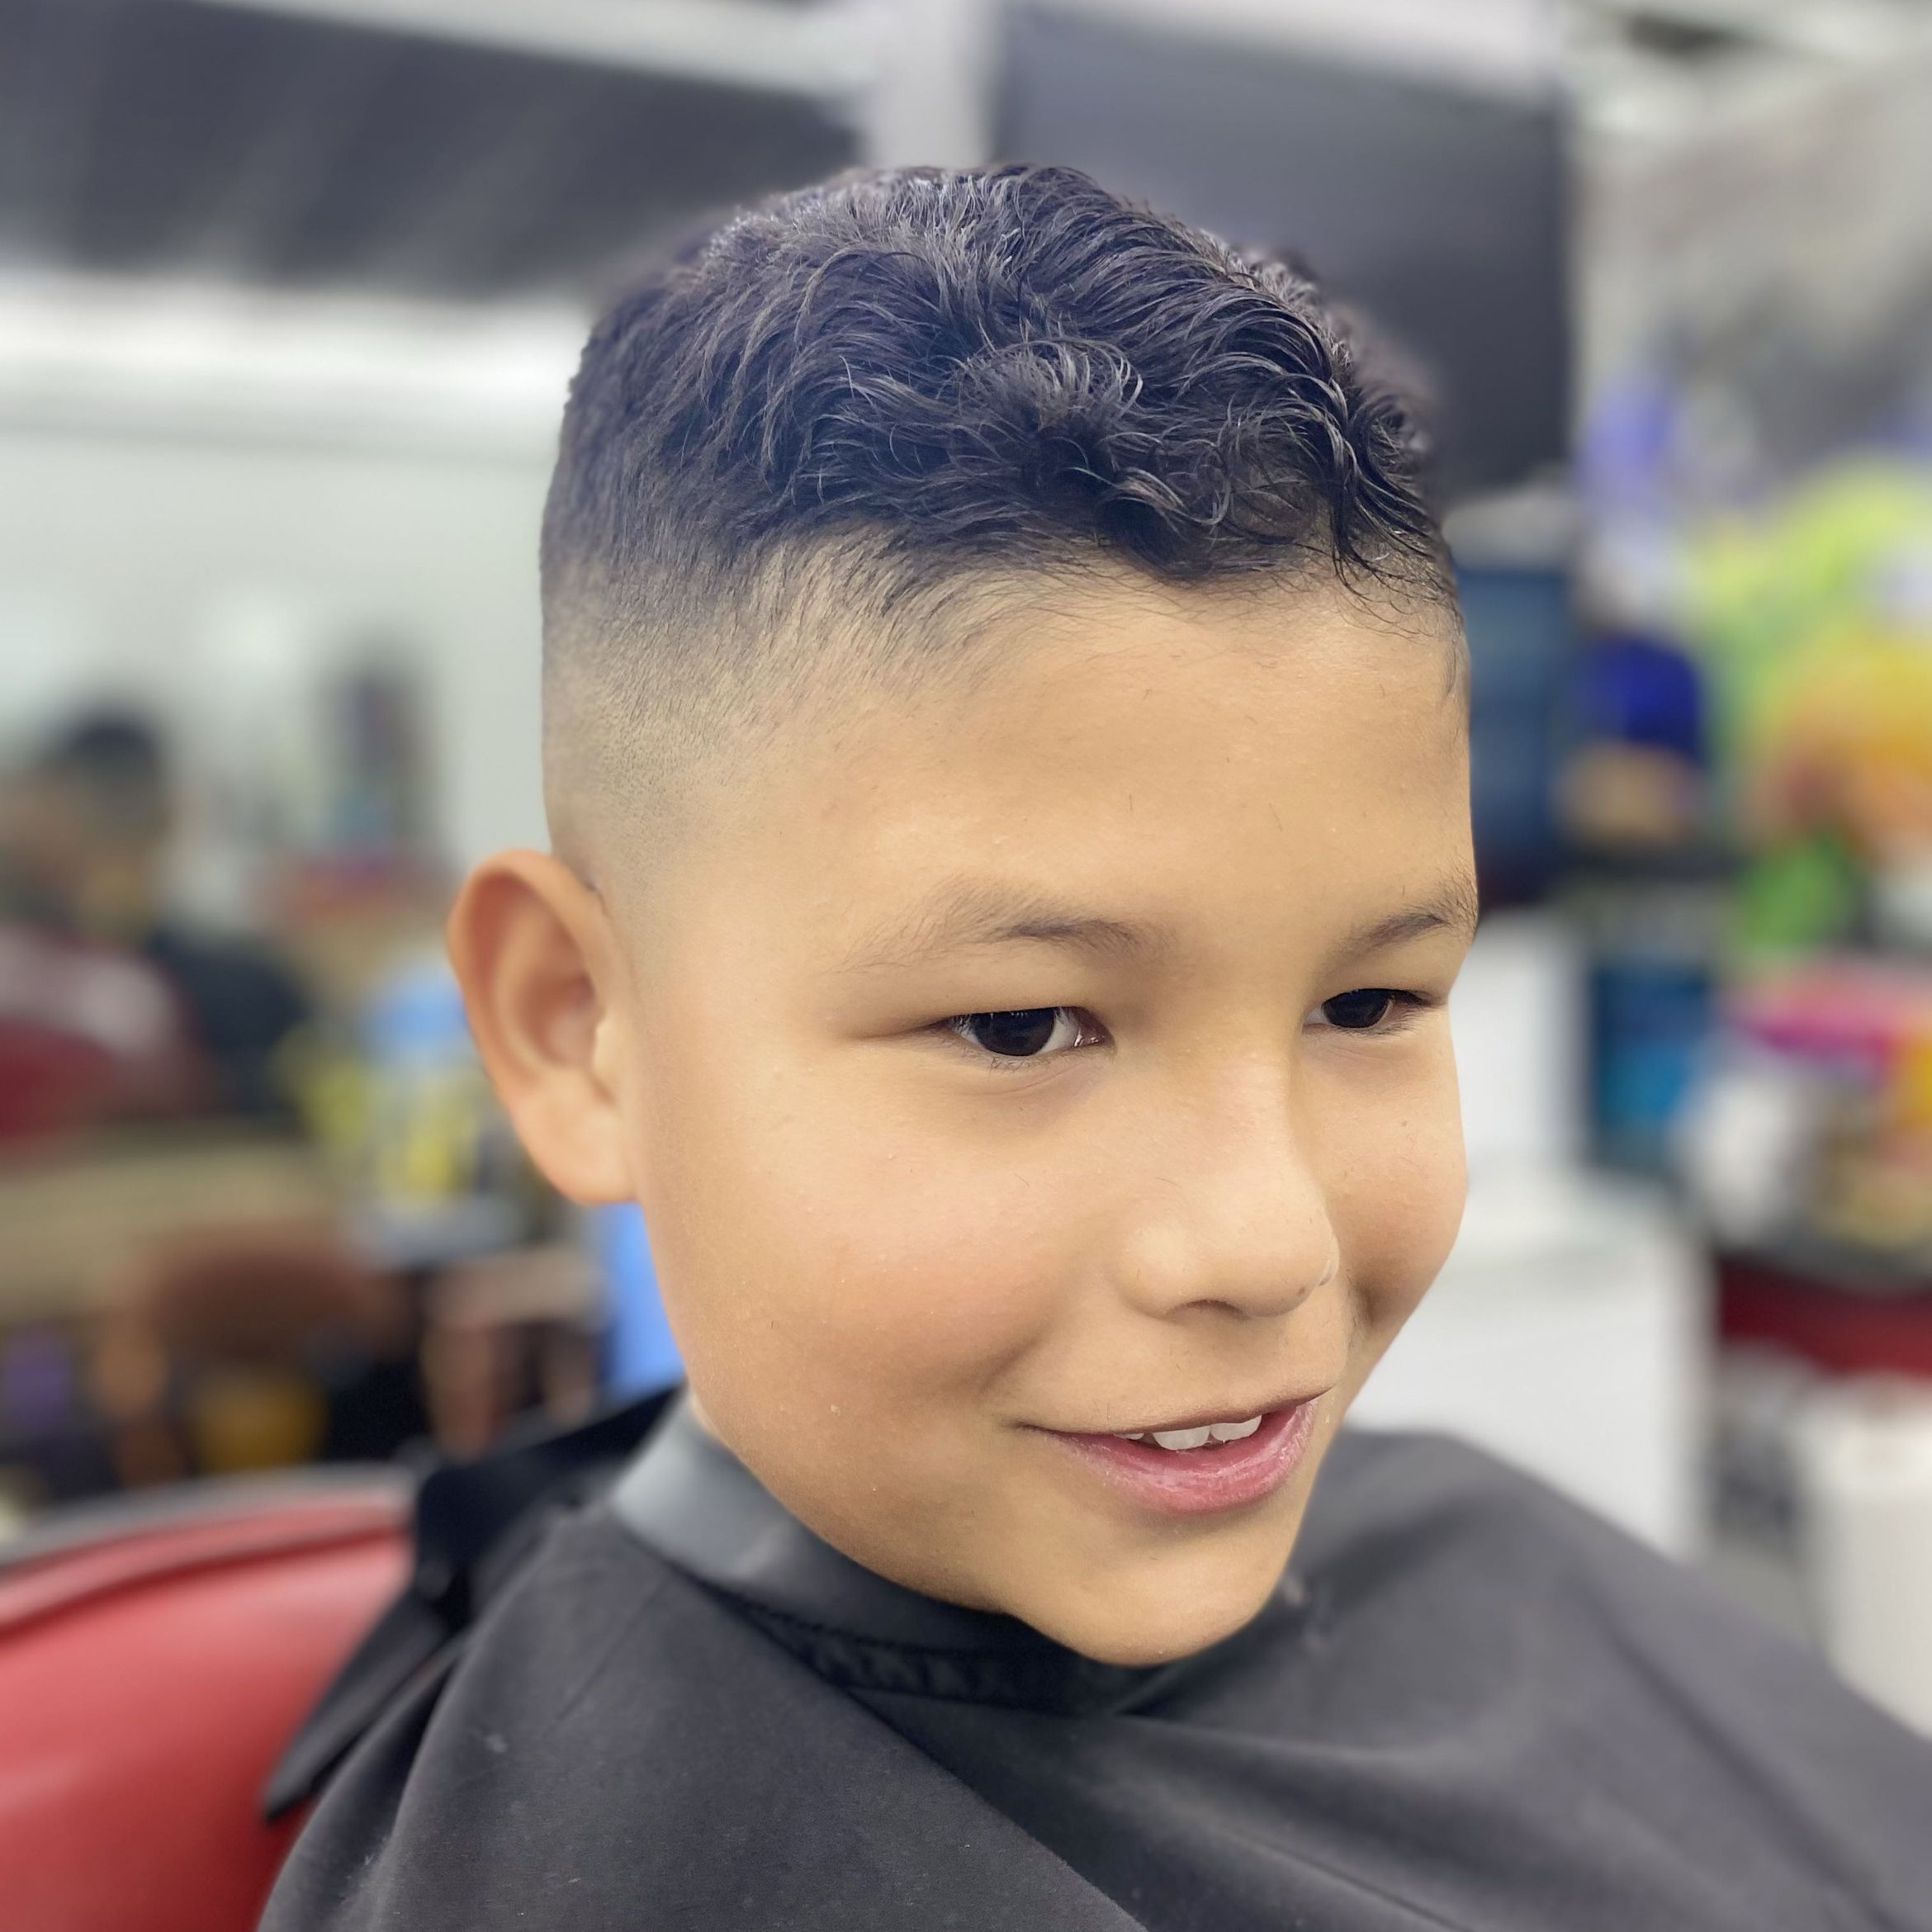 Kids Haircuts (Under 10) portfolio